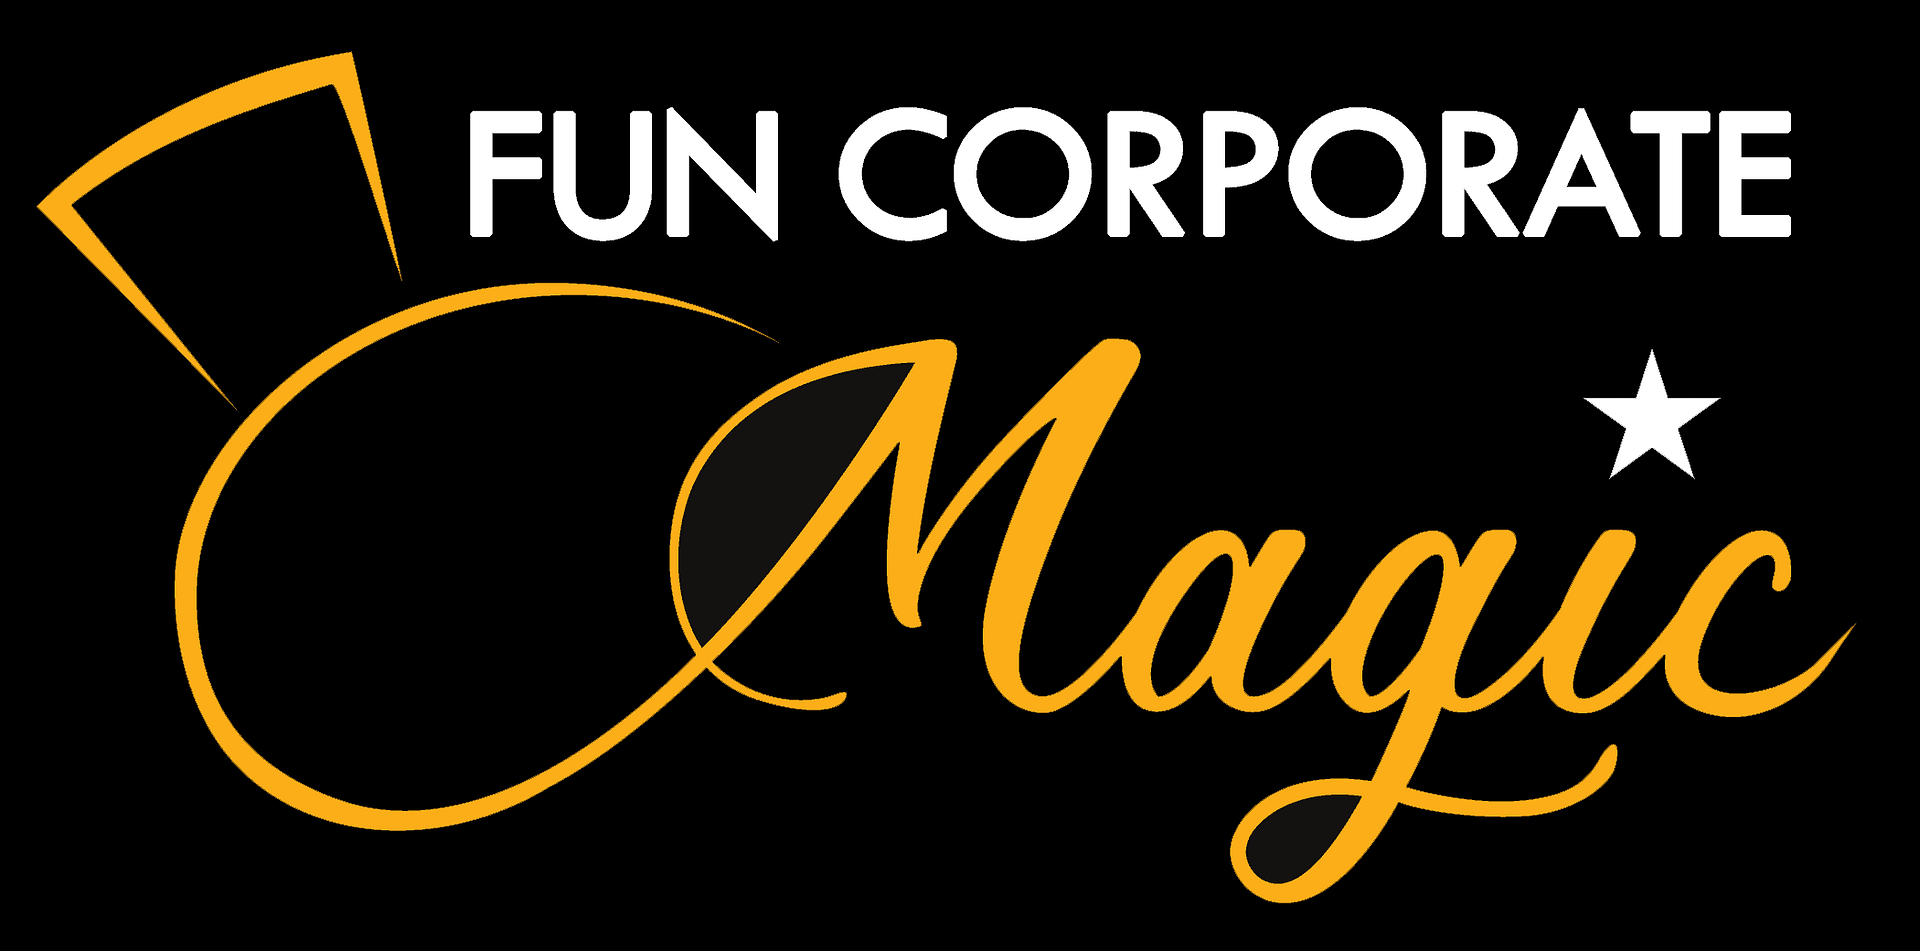 Fun Corporate Magic Black